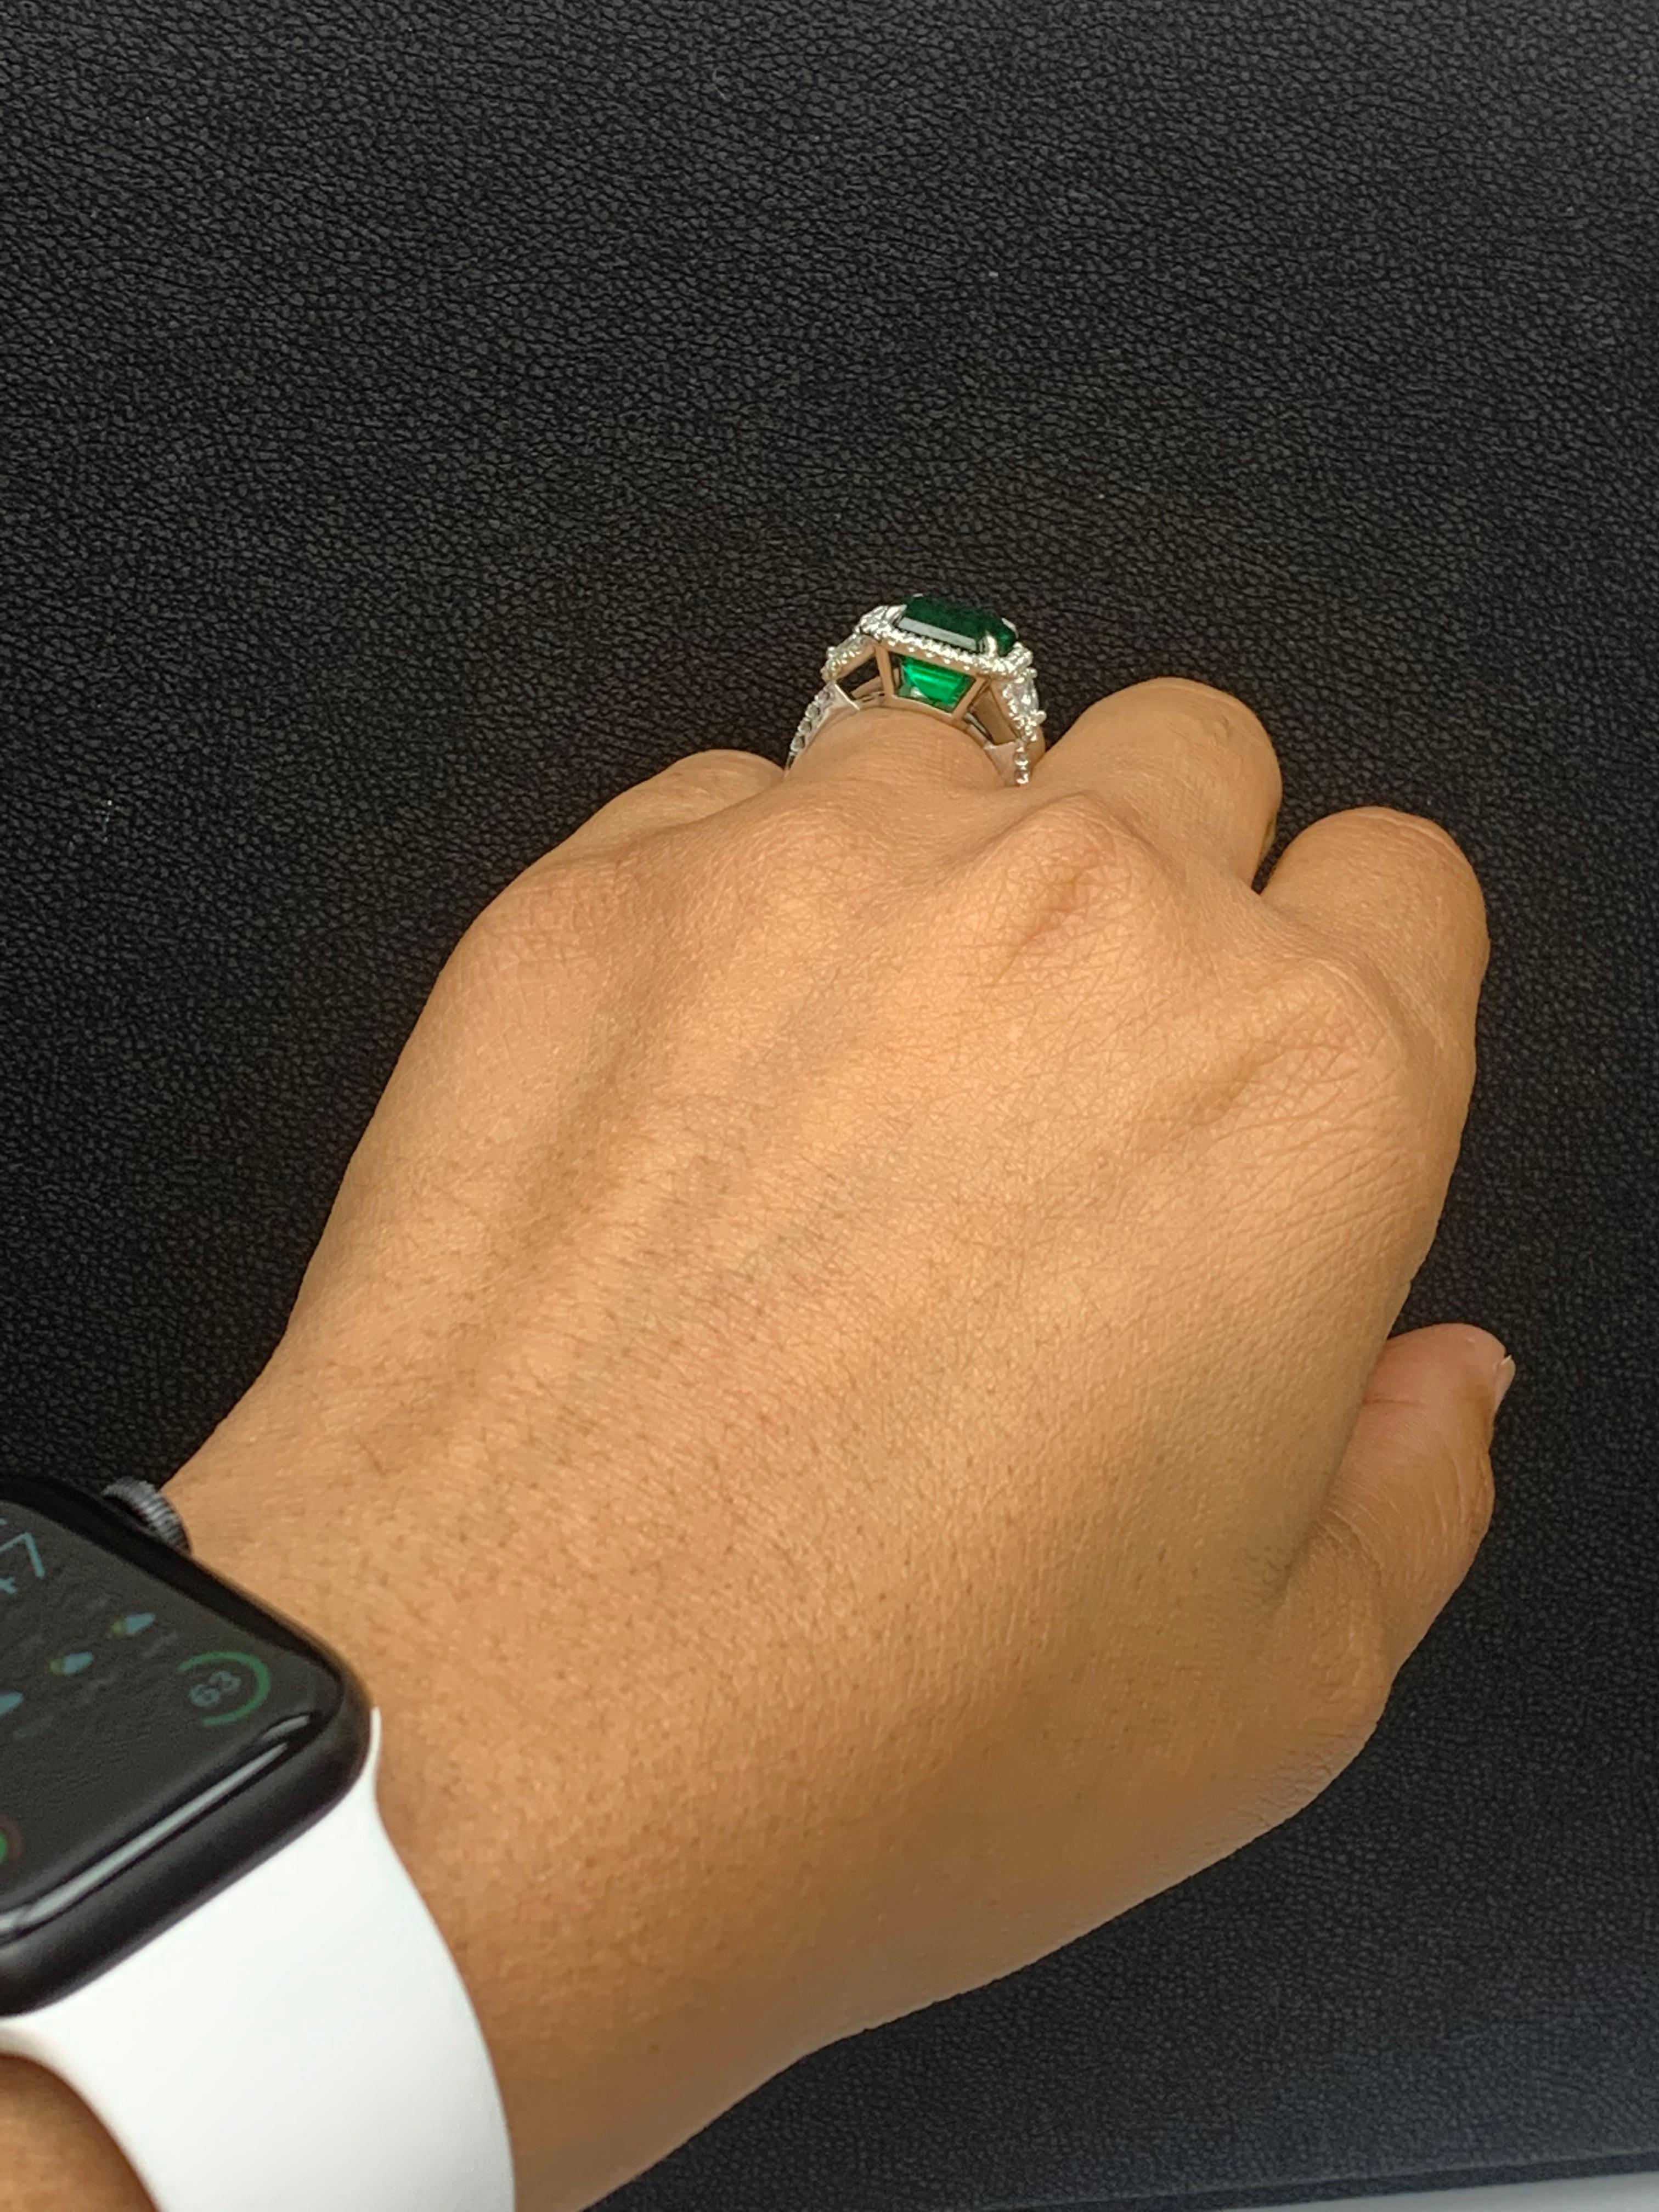 Certified 5.23 Carat Emerald Cut Emerald Diamond 3 Stone Halo Ring in Platinum For Sale 7